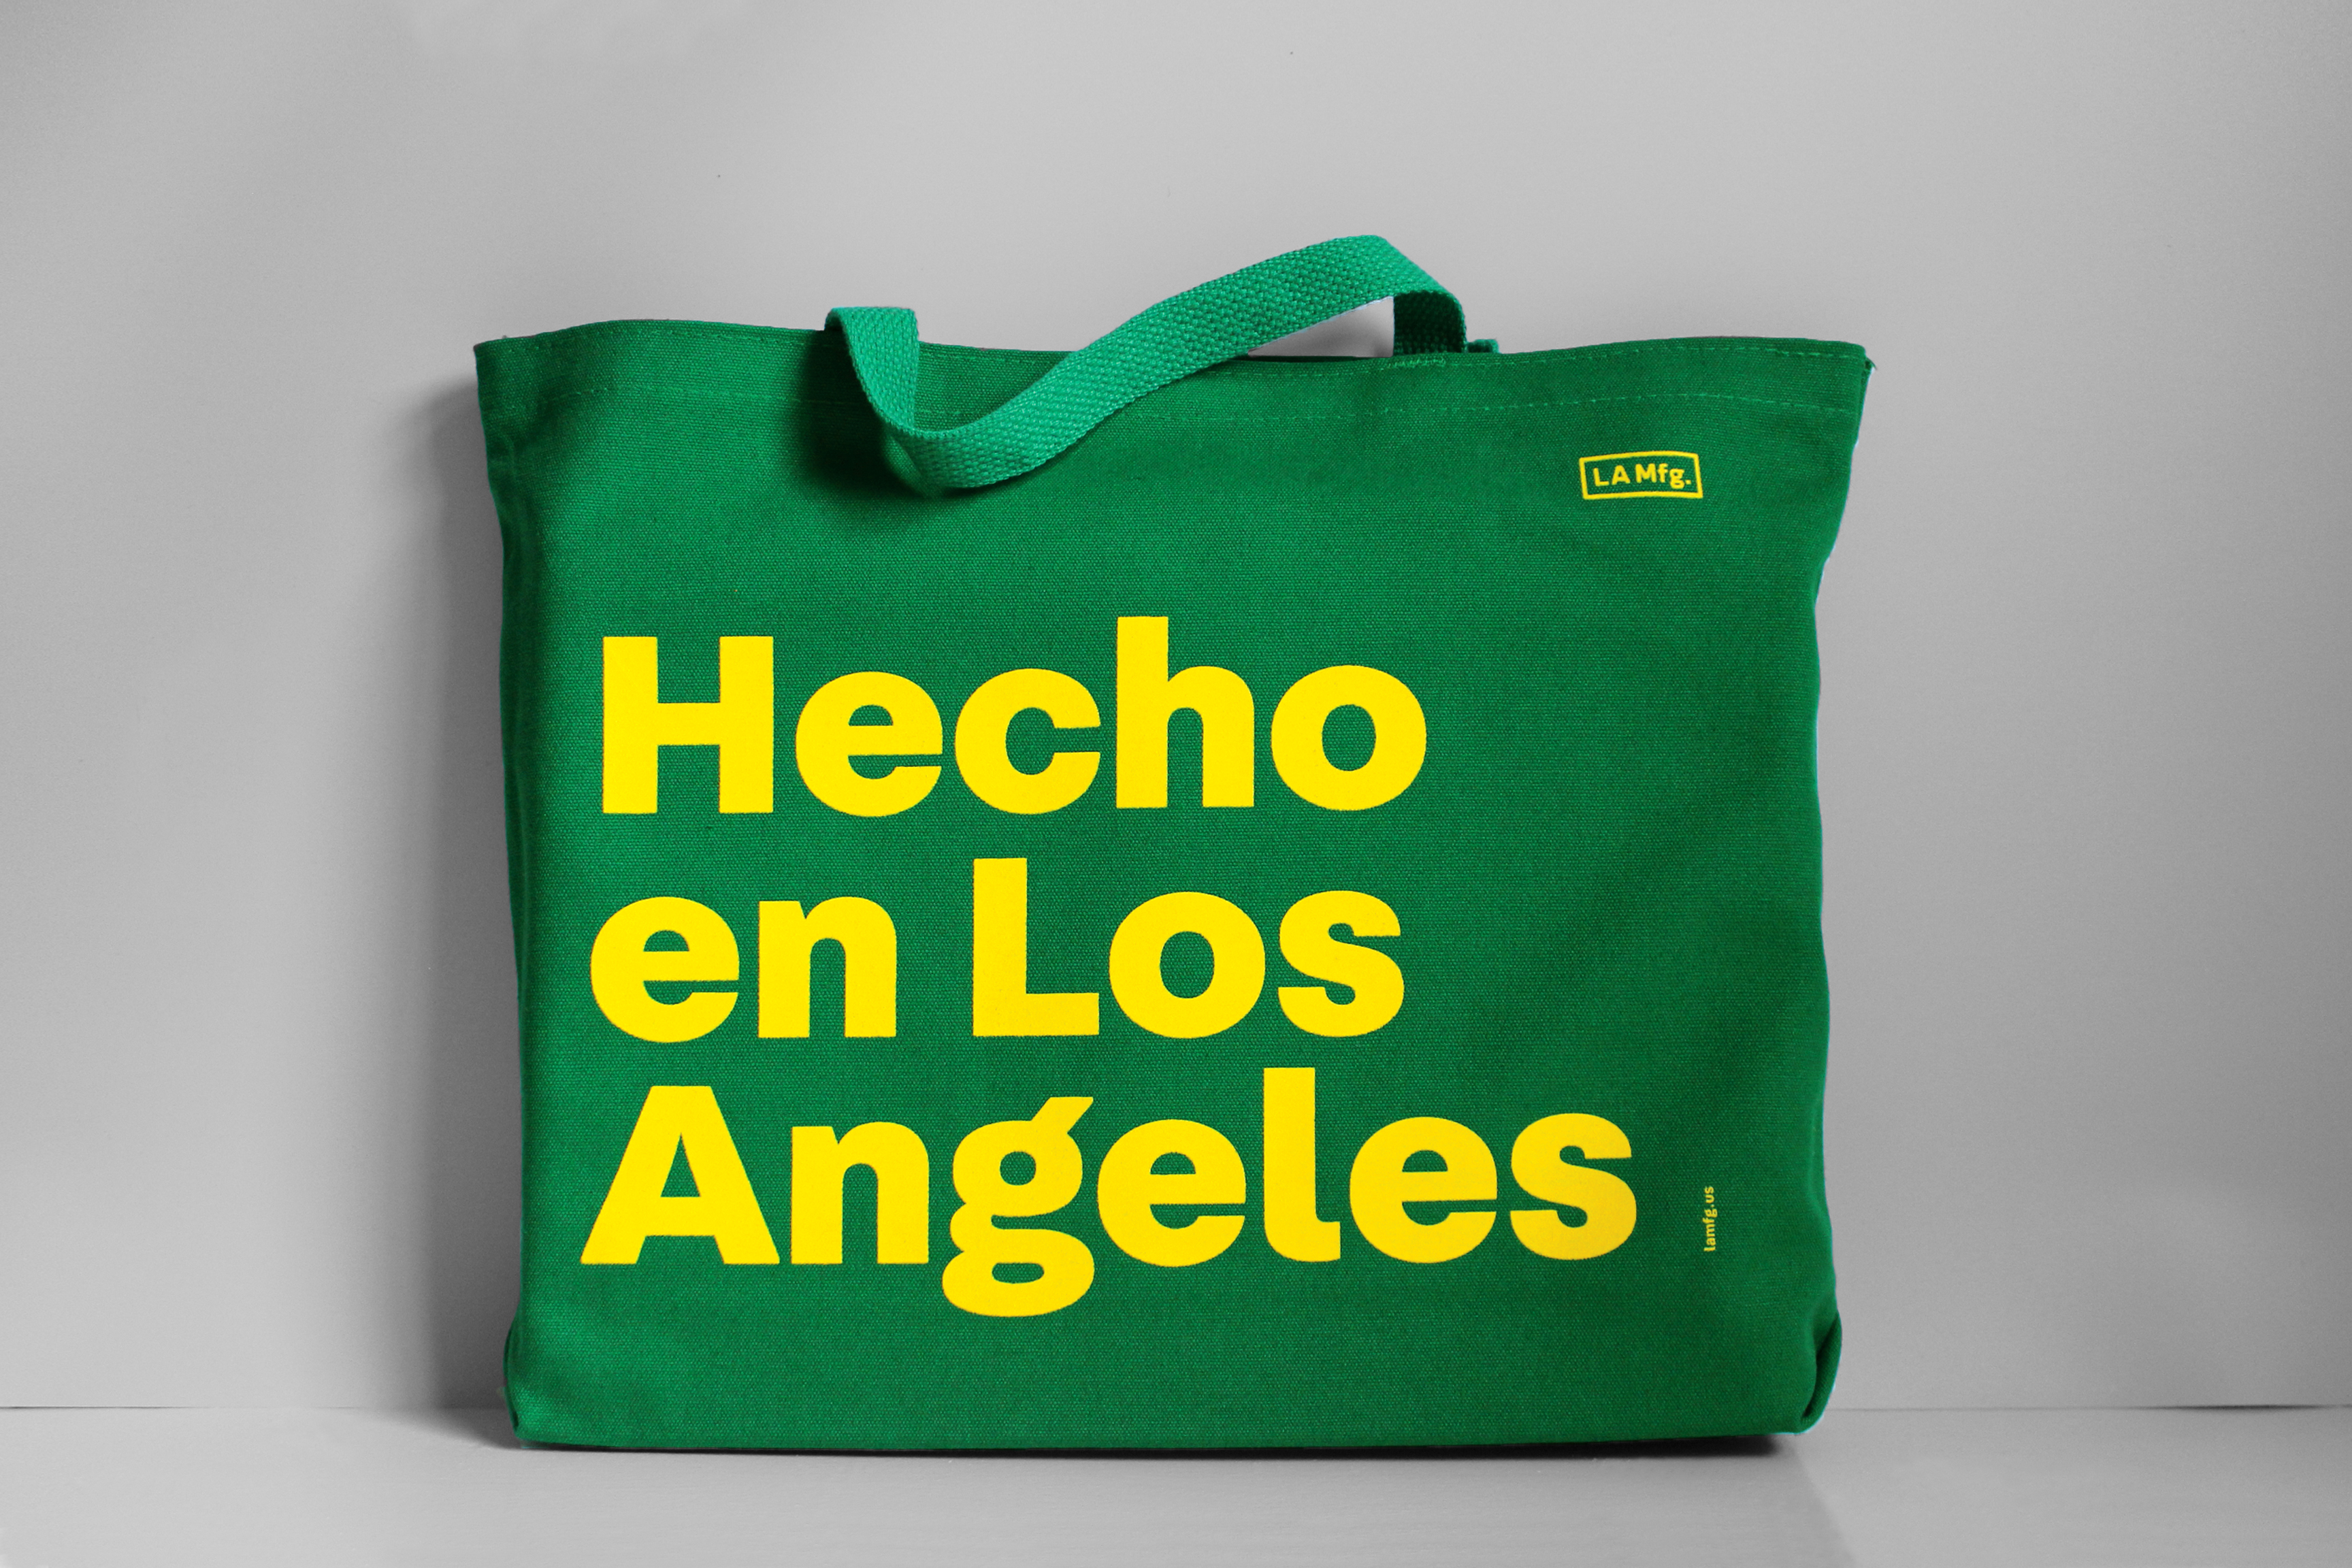 Los Angeles Dodgers Patterned Tote Bag